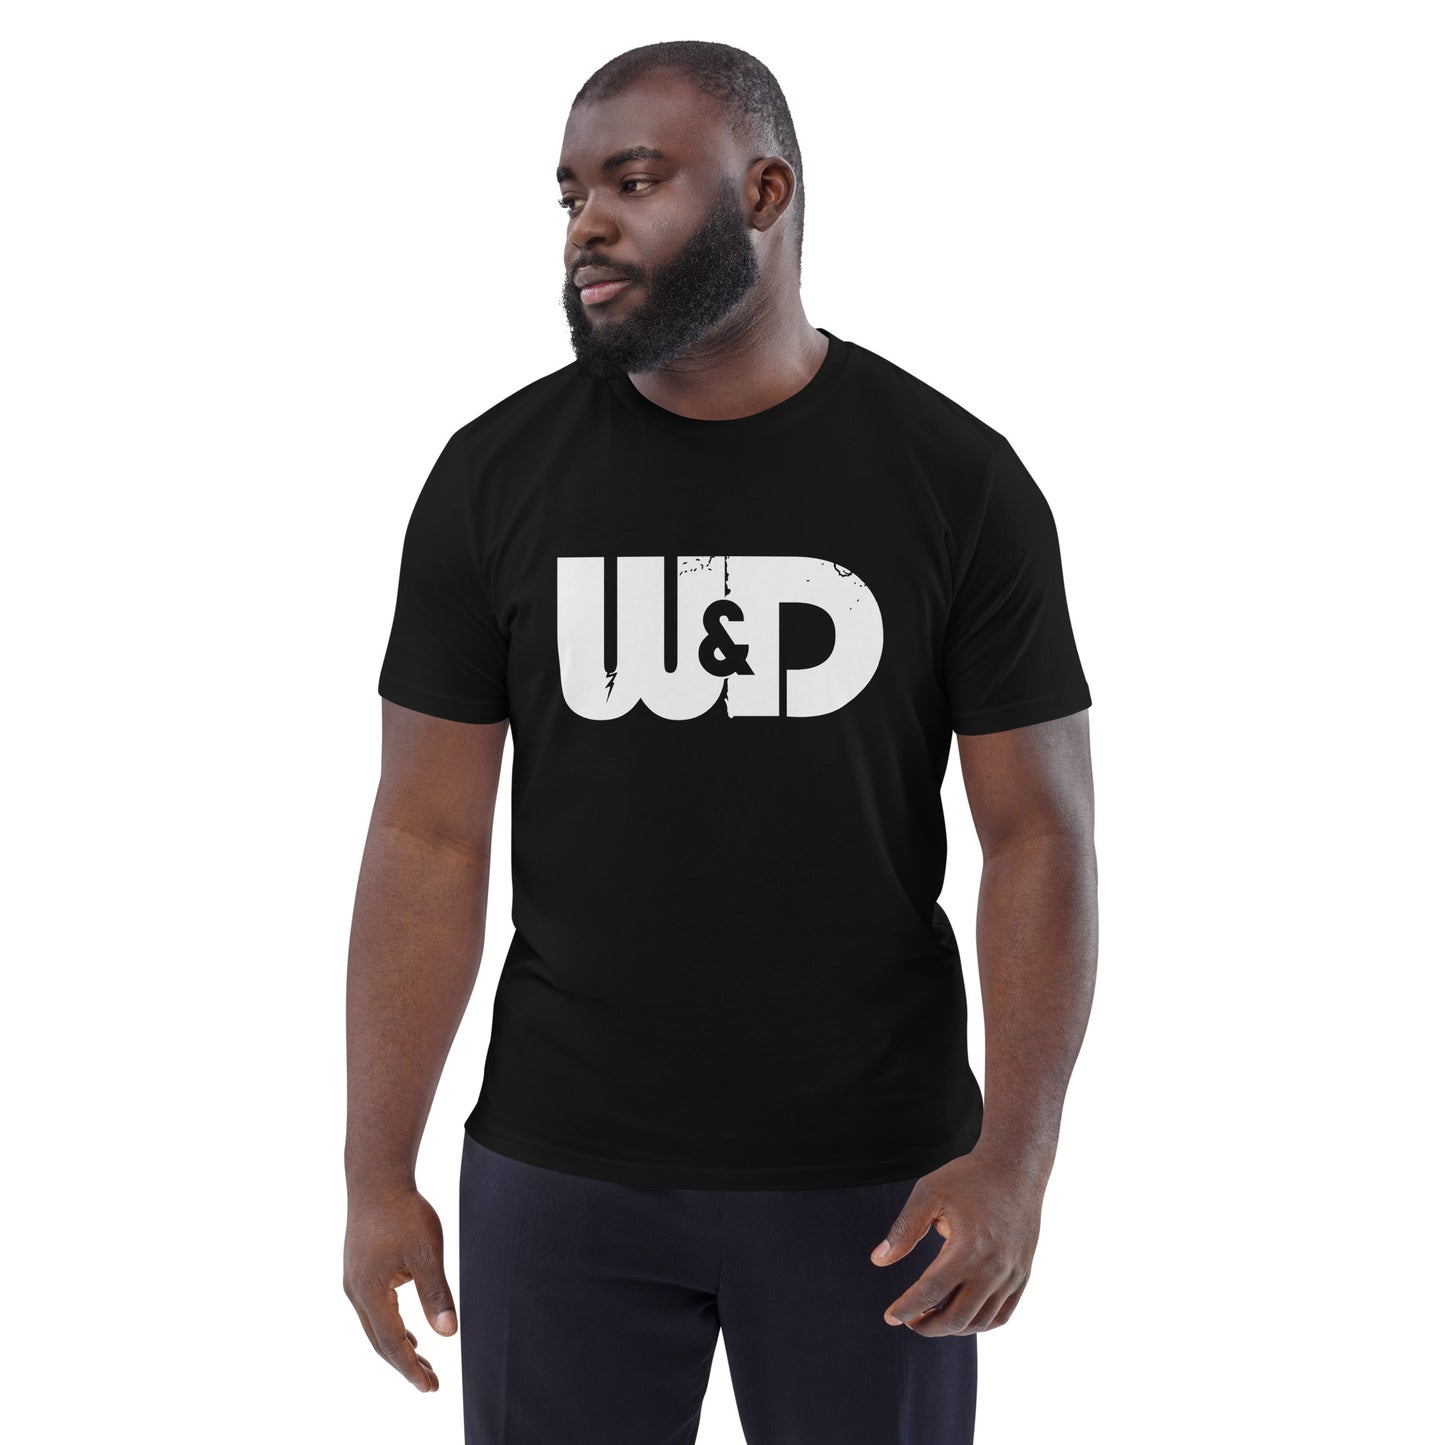 W&D Unisex Organic Cotton T-Shirt